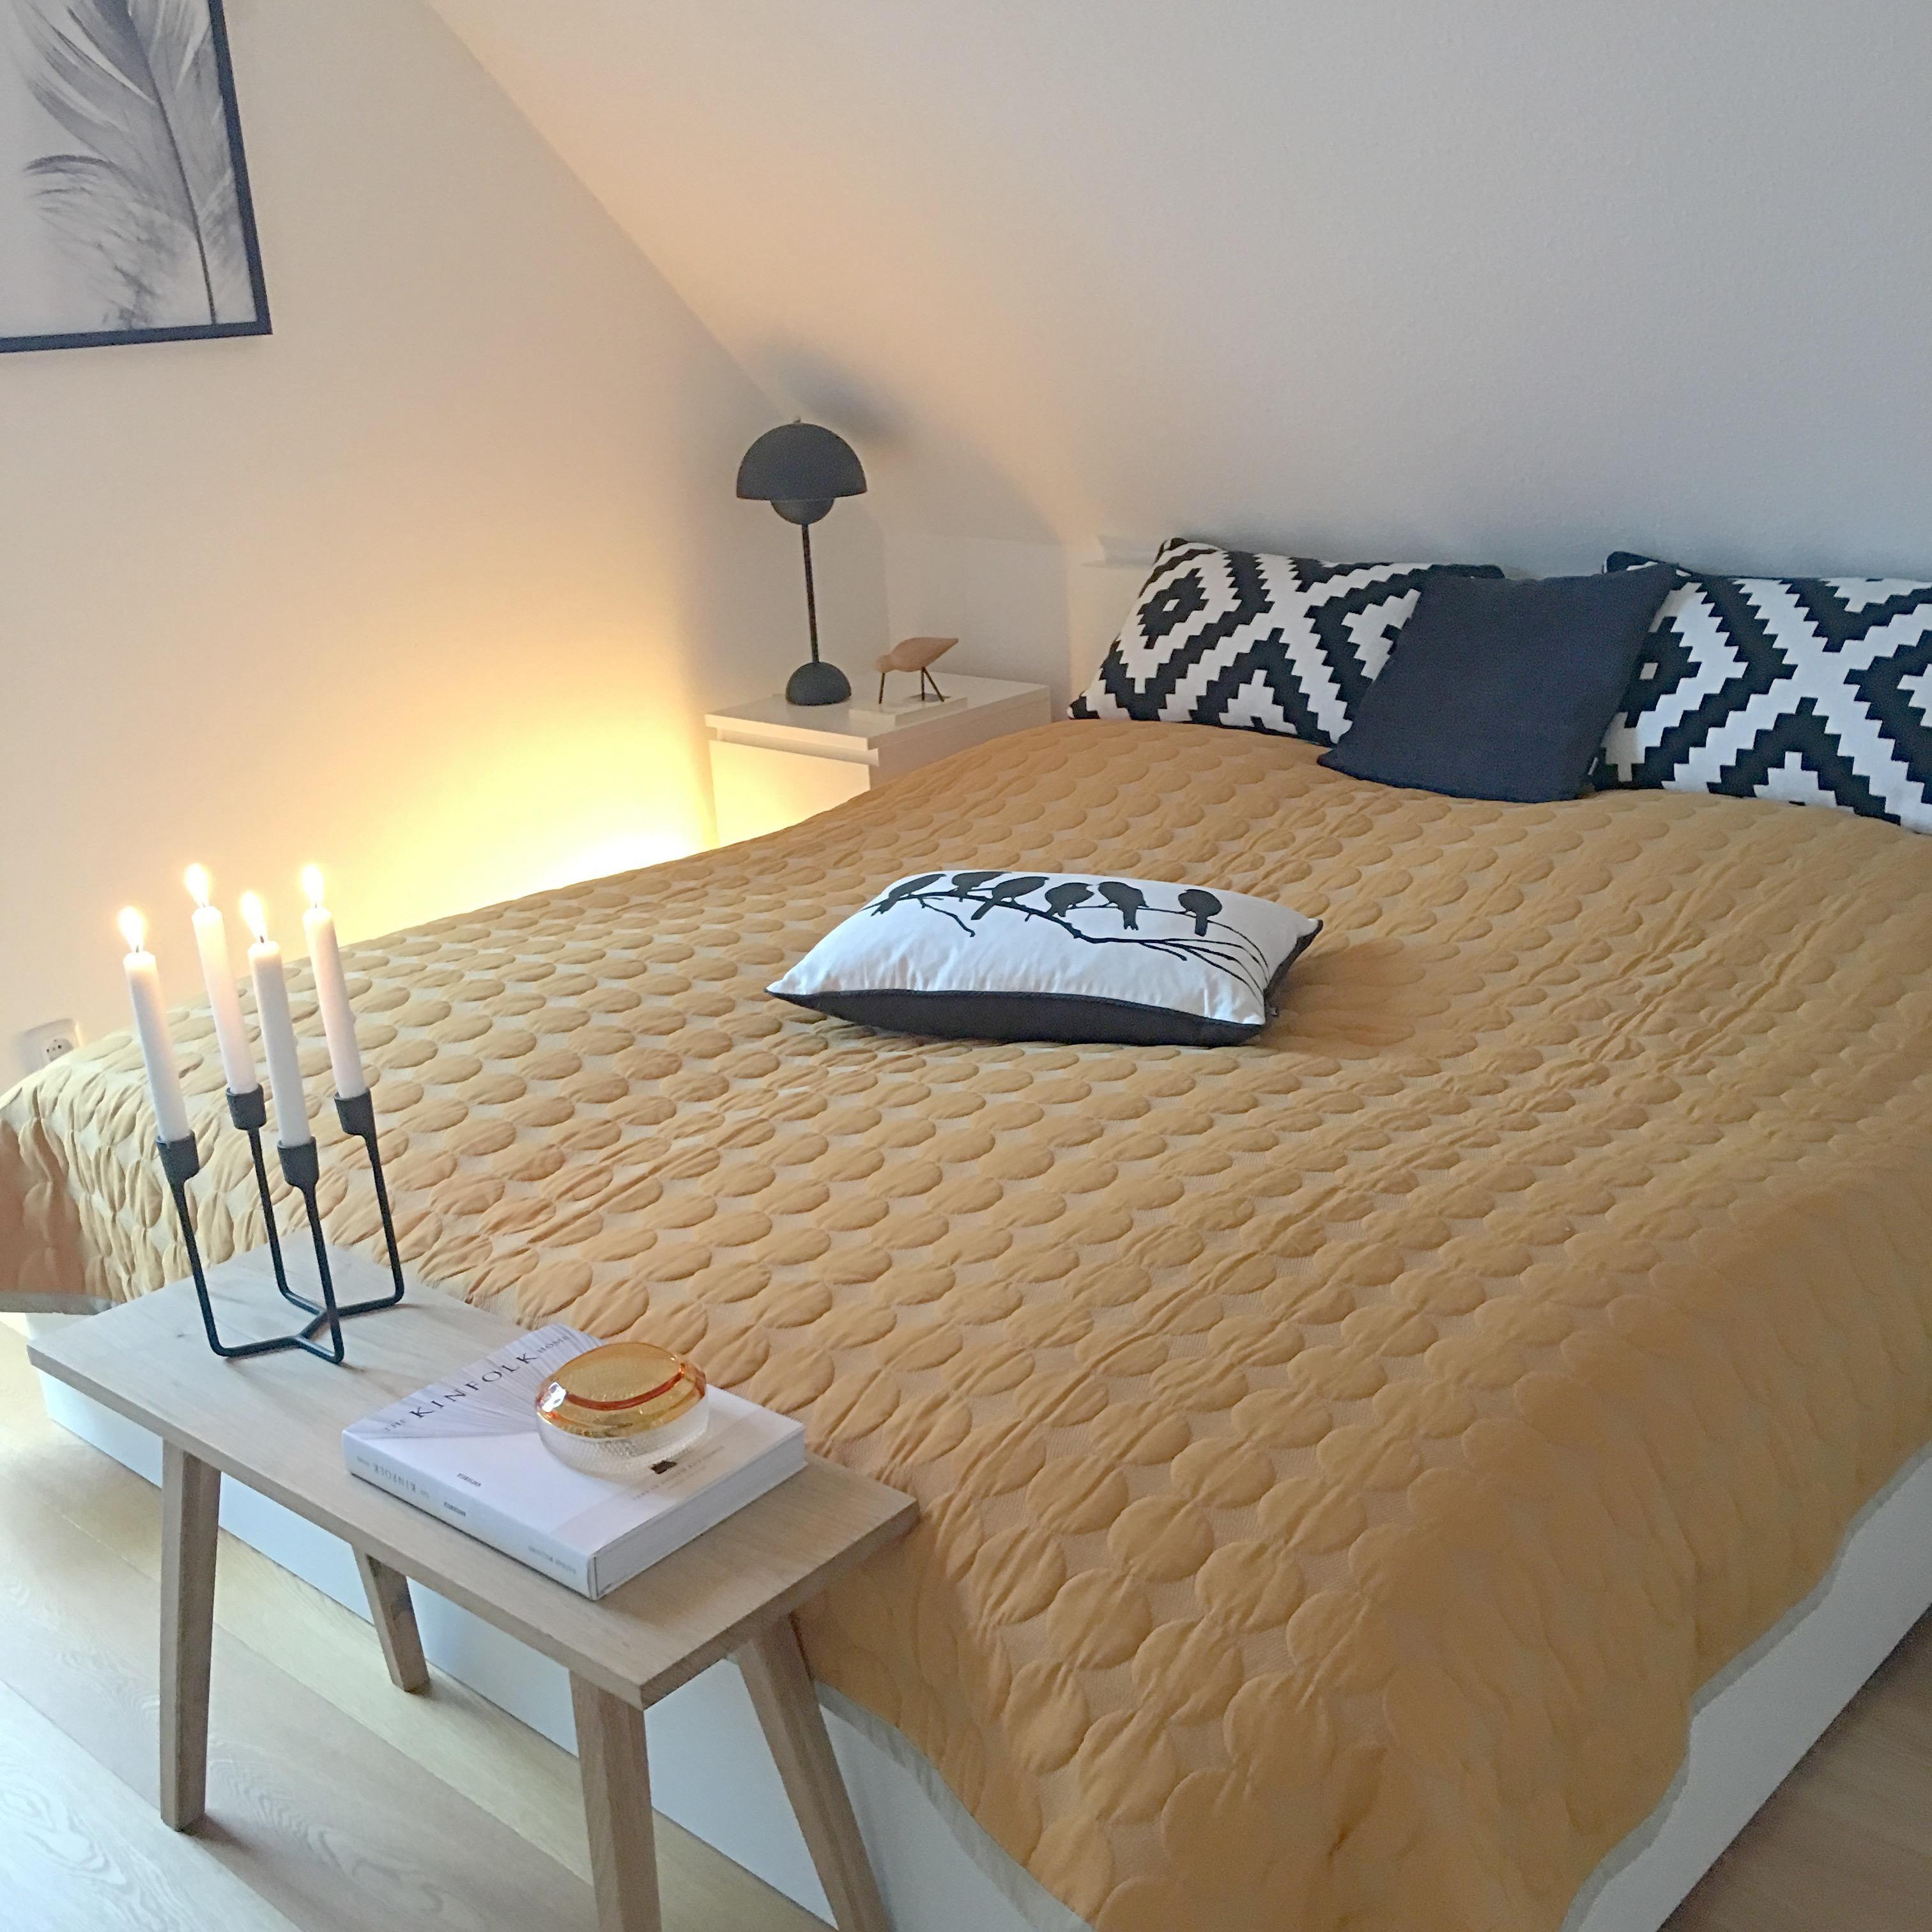 Schlafzimmer 🛏💤neu gestaltet #Schlafzimmer #Living #Skandinavisch #Bett #Tagesdecke #Kissen